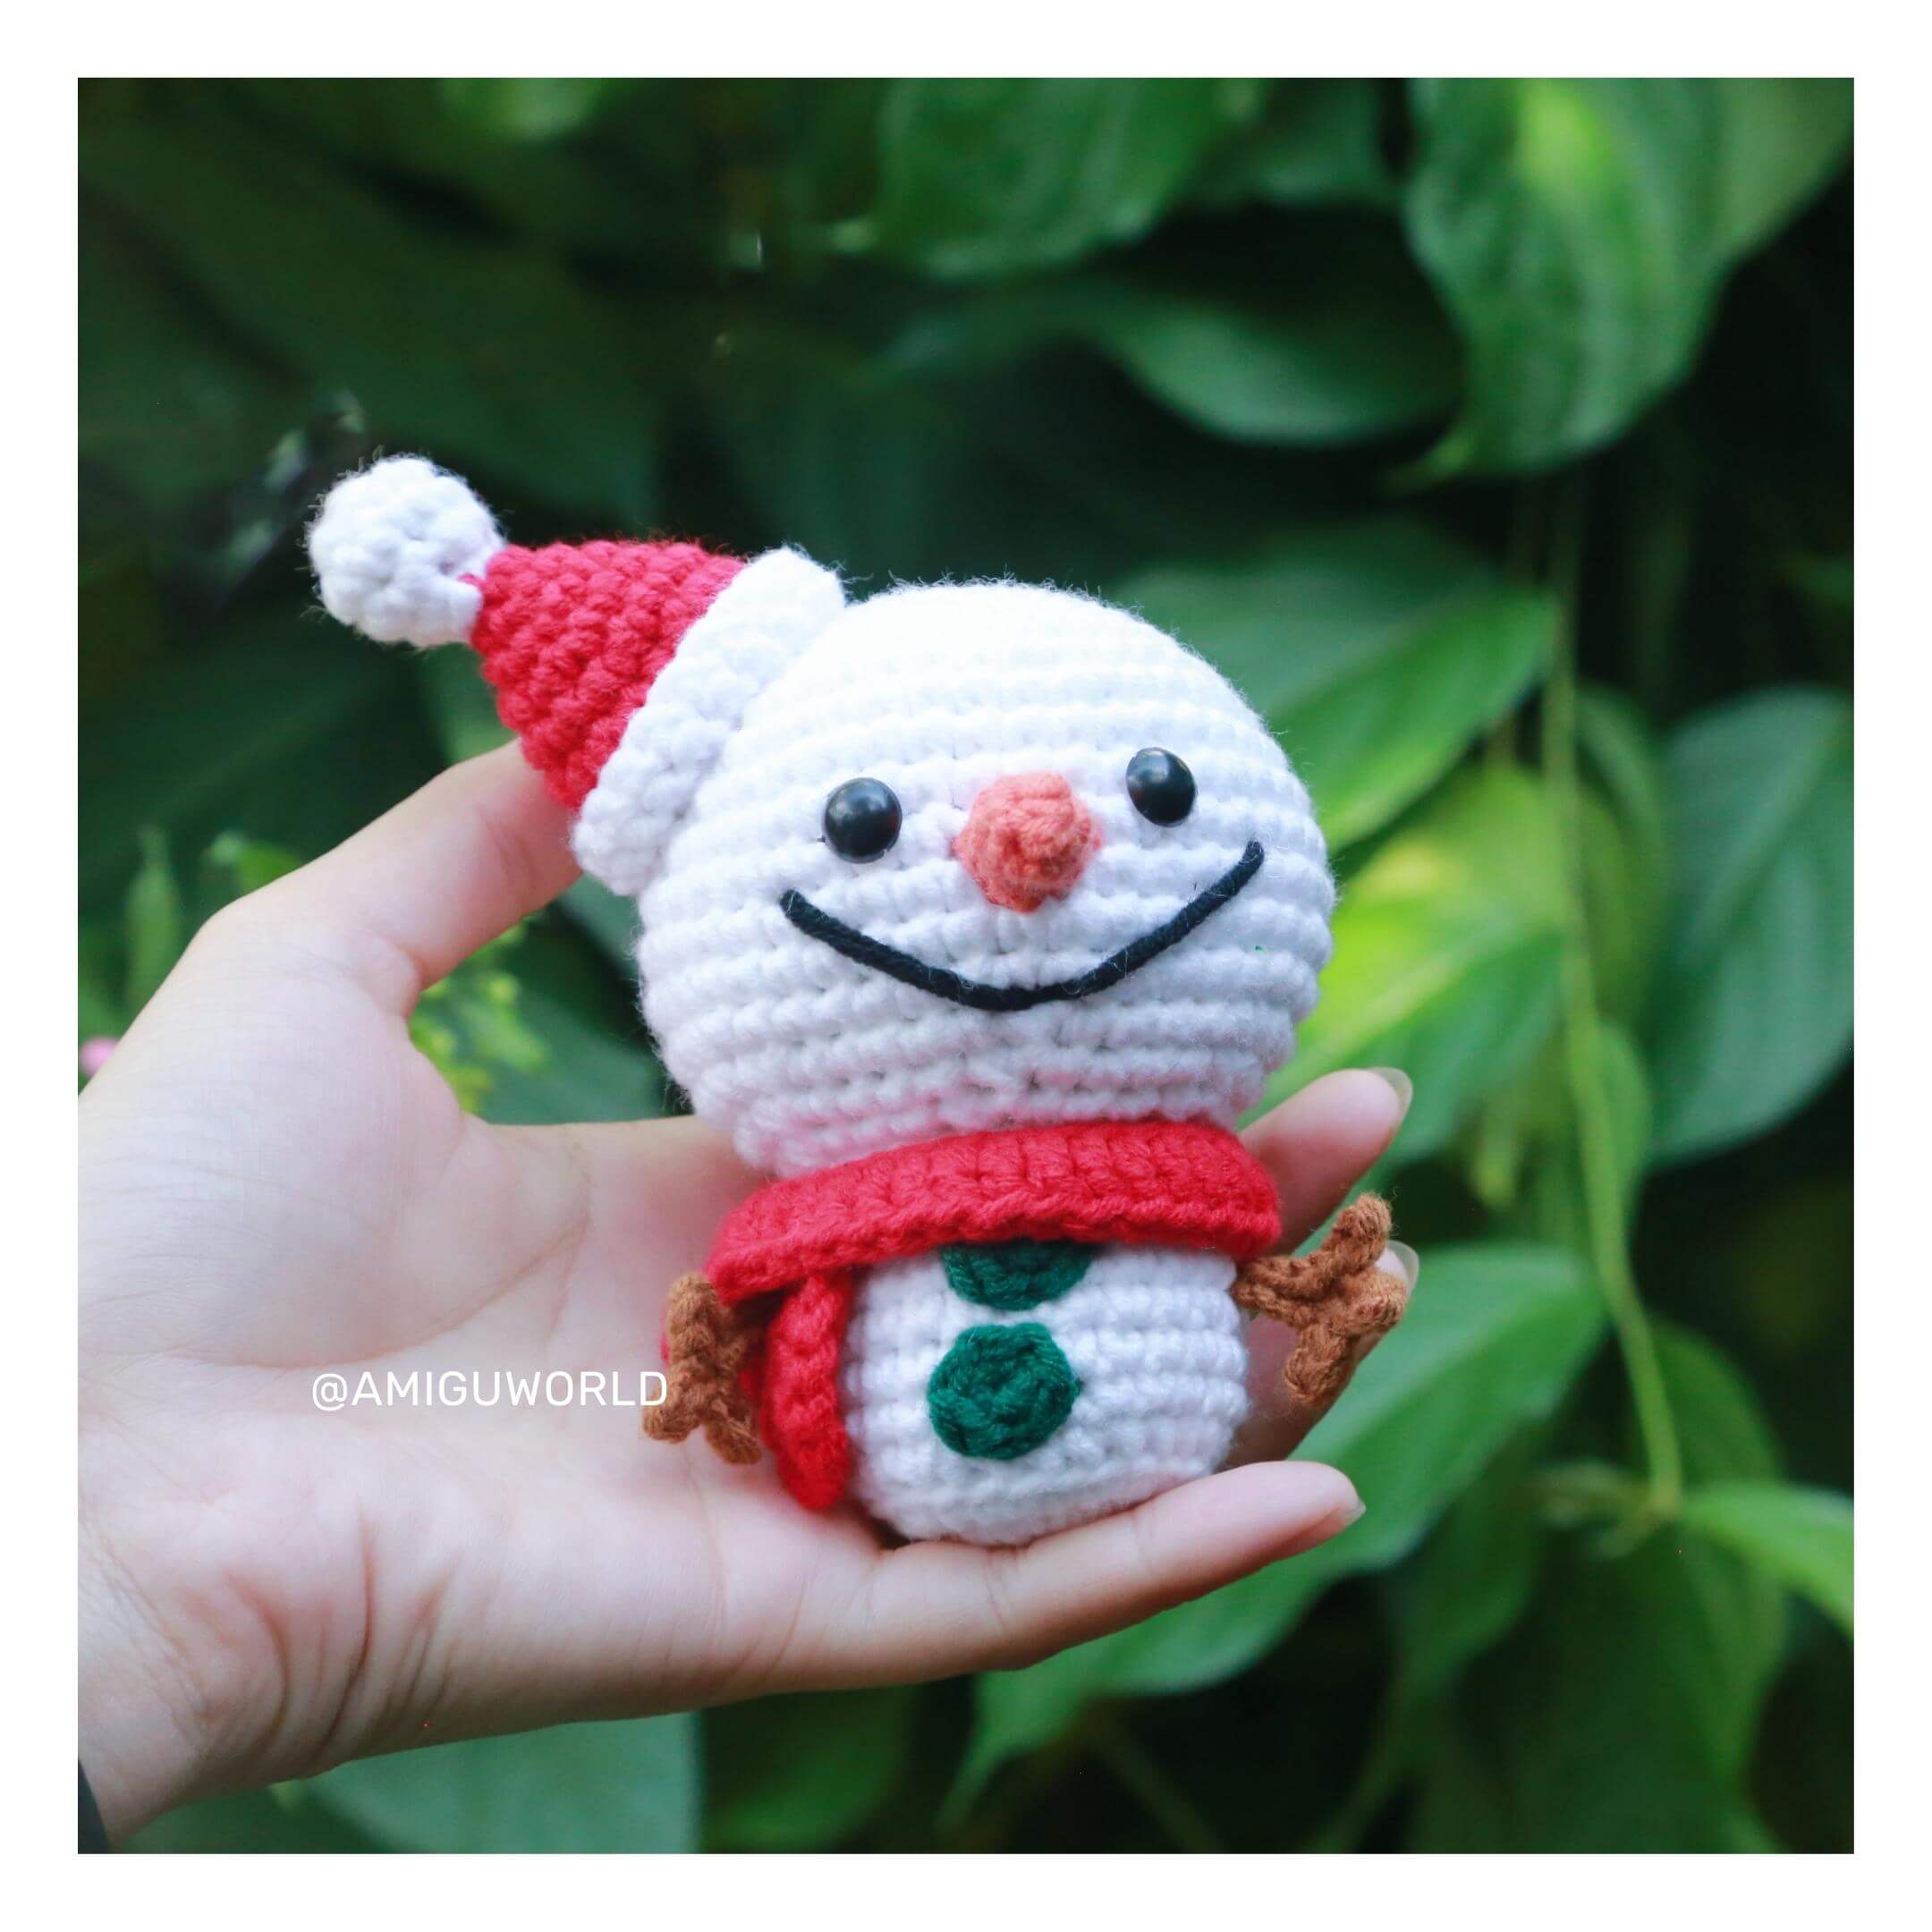 snowman-amigurumi-crochet-pattern-by-amiguworld (8)